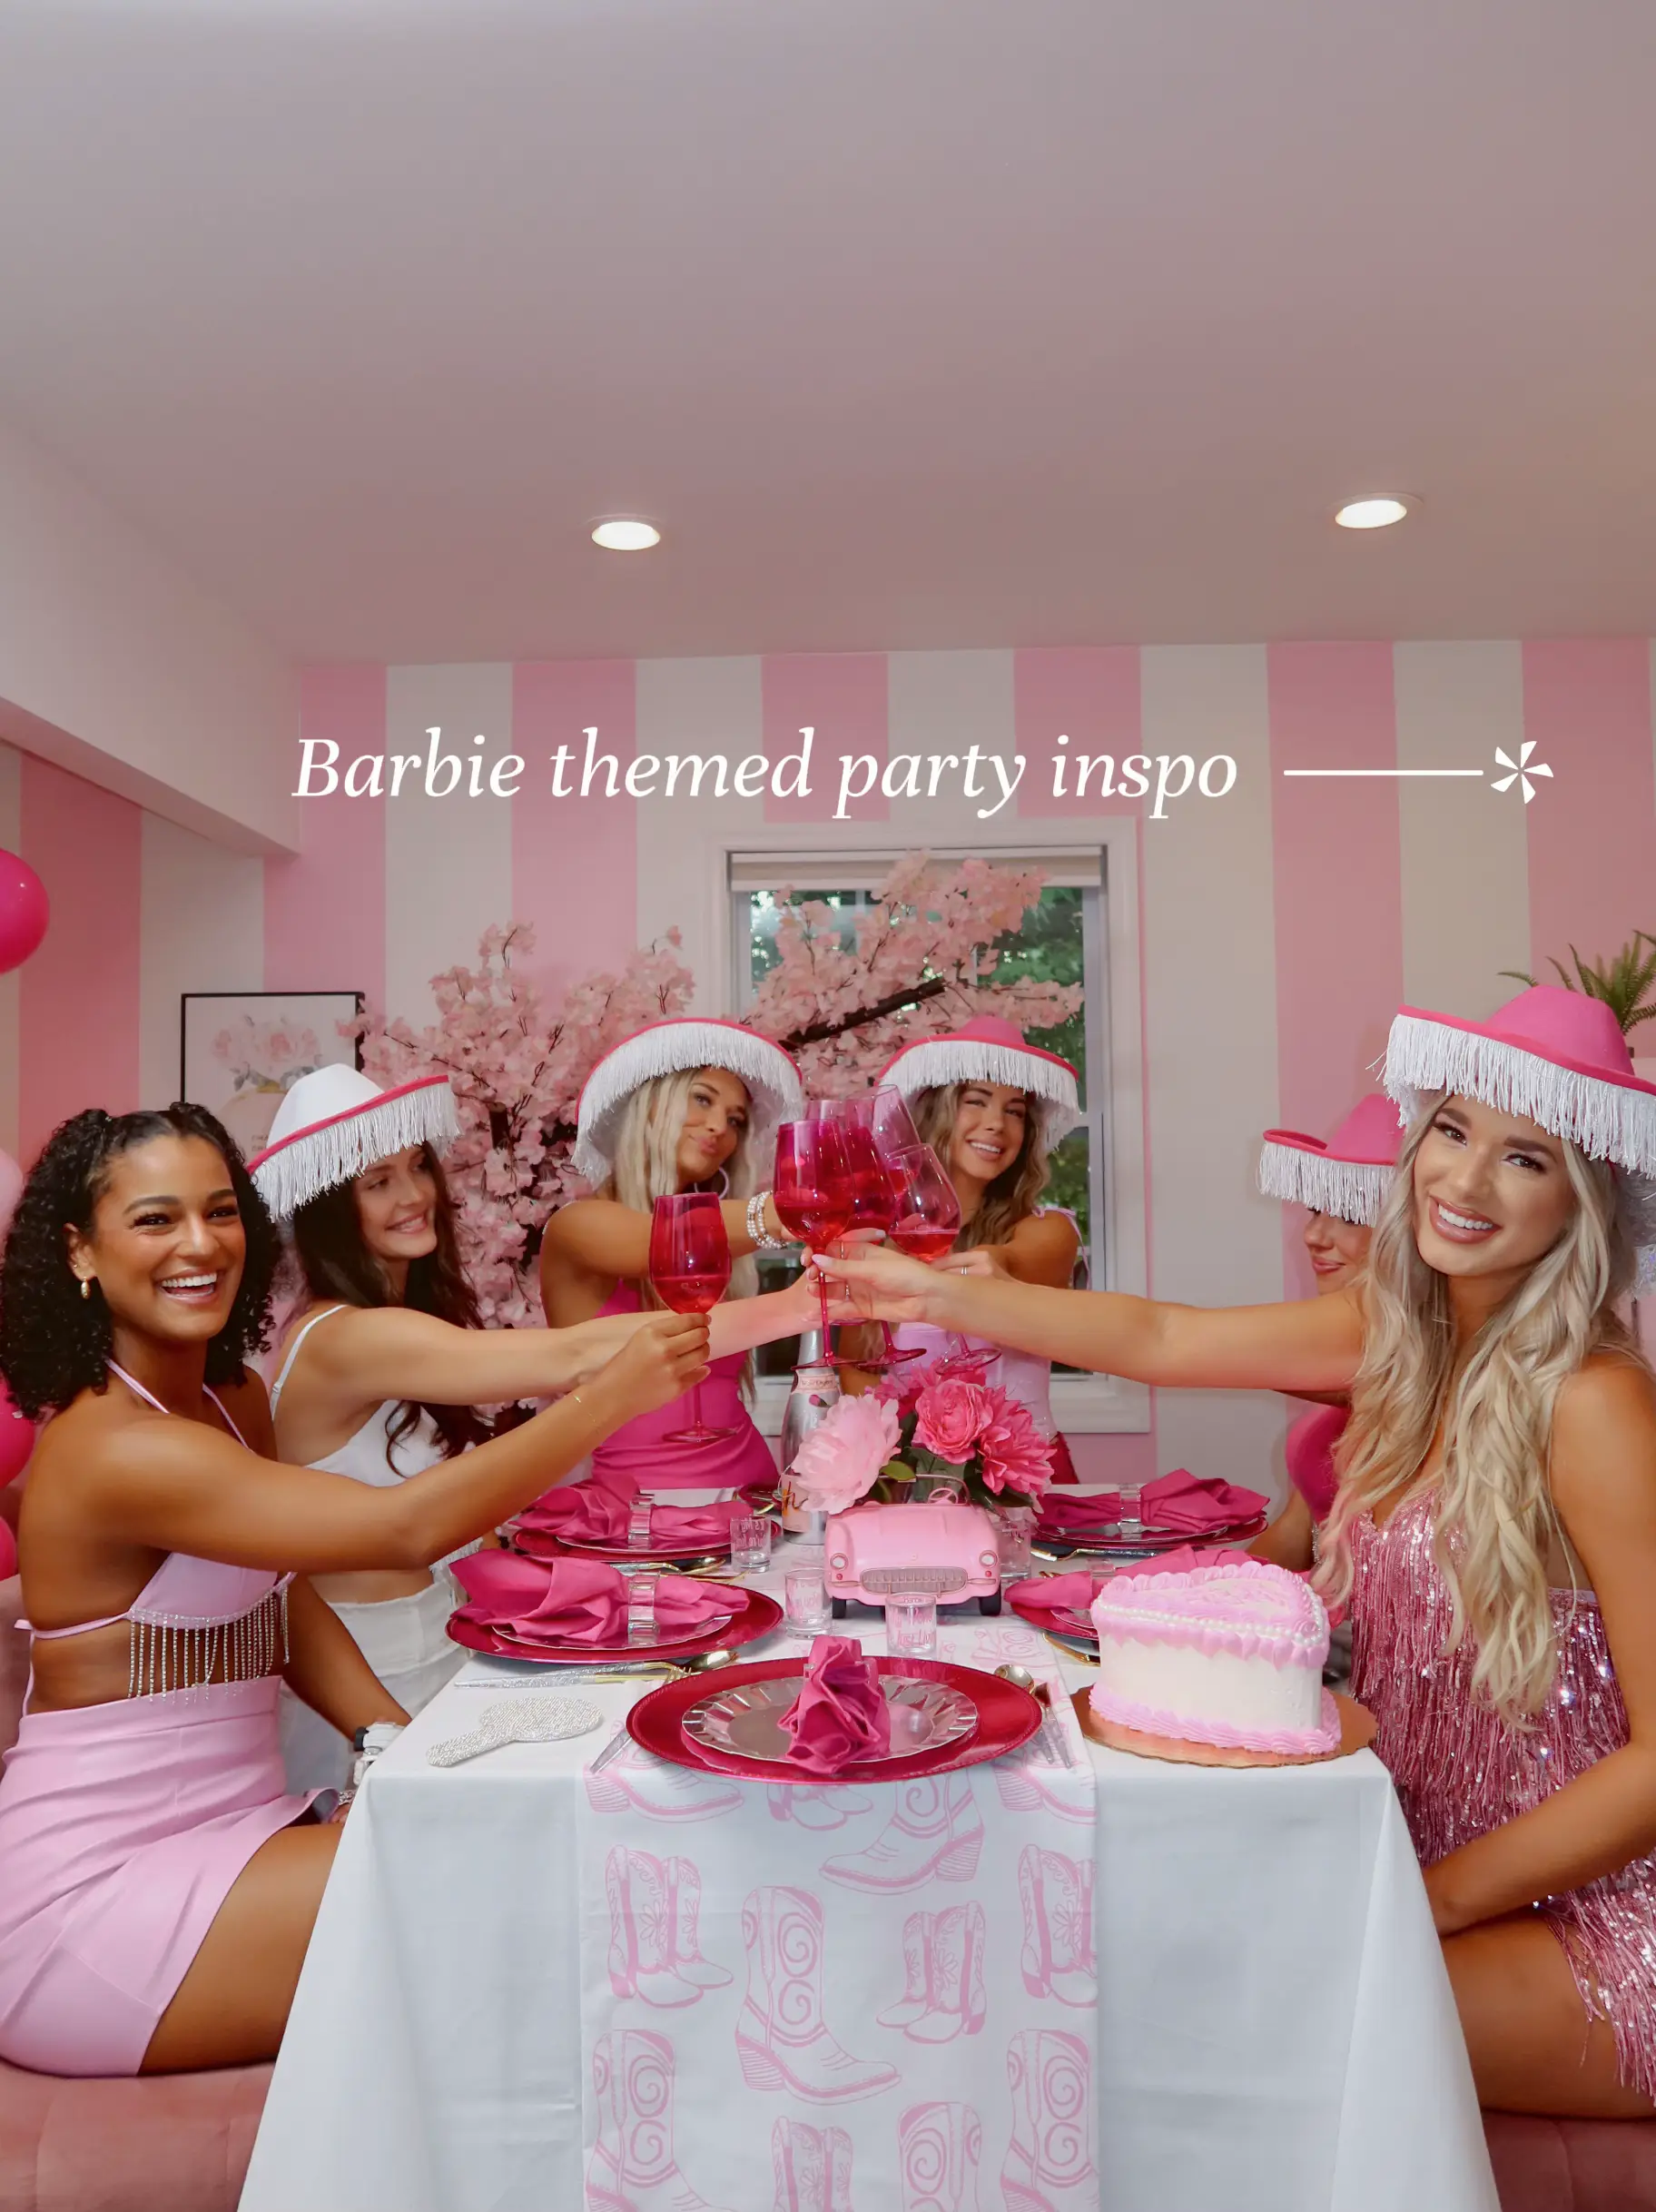 Barbie Bachelorette T-Shirt | Pink, White Barbie Bride Matching Shirts